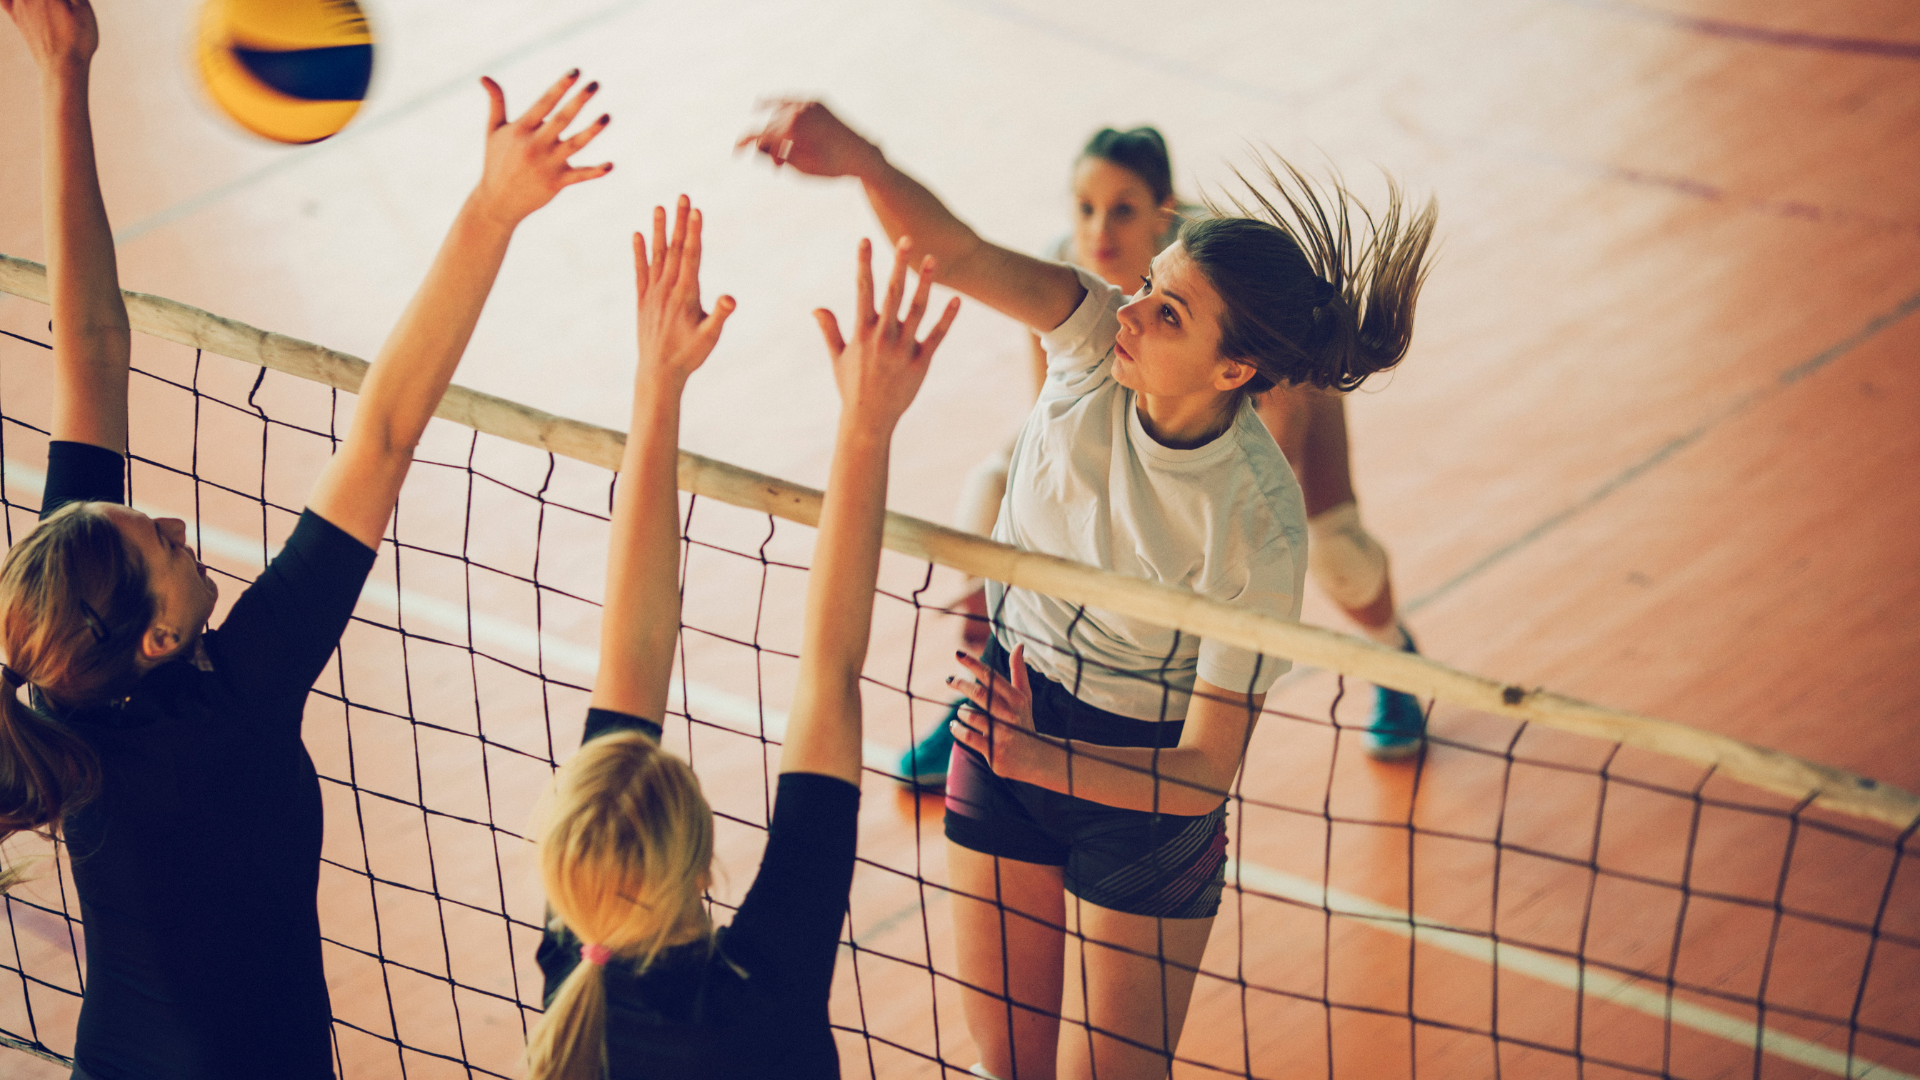 Bermain Game The Spike Volleyball Story Versi Mod Apk Apakah Aman